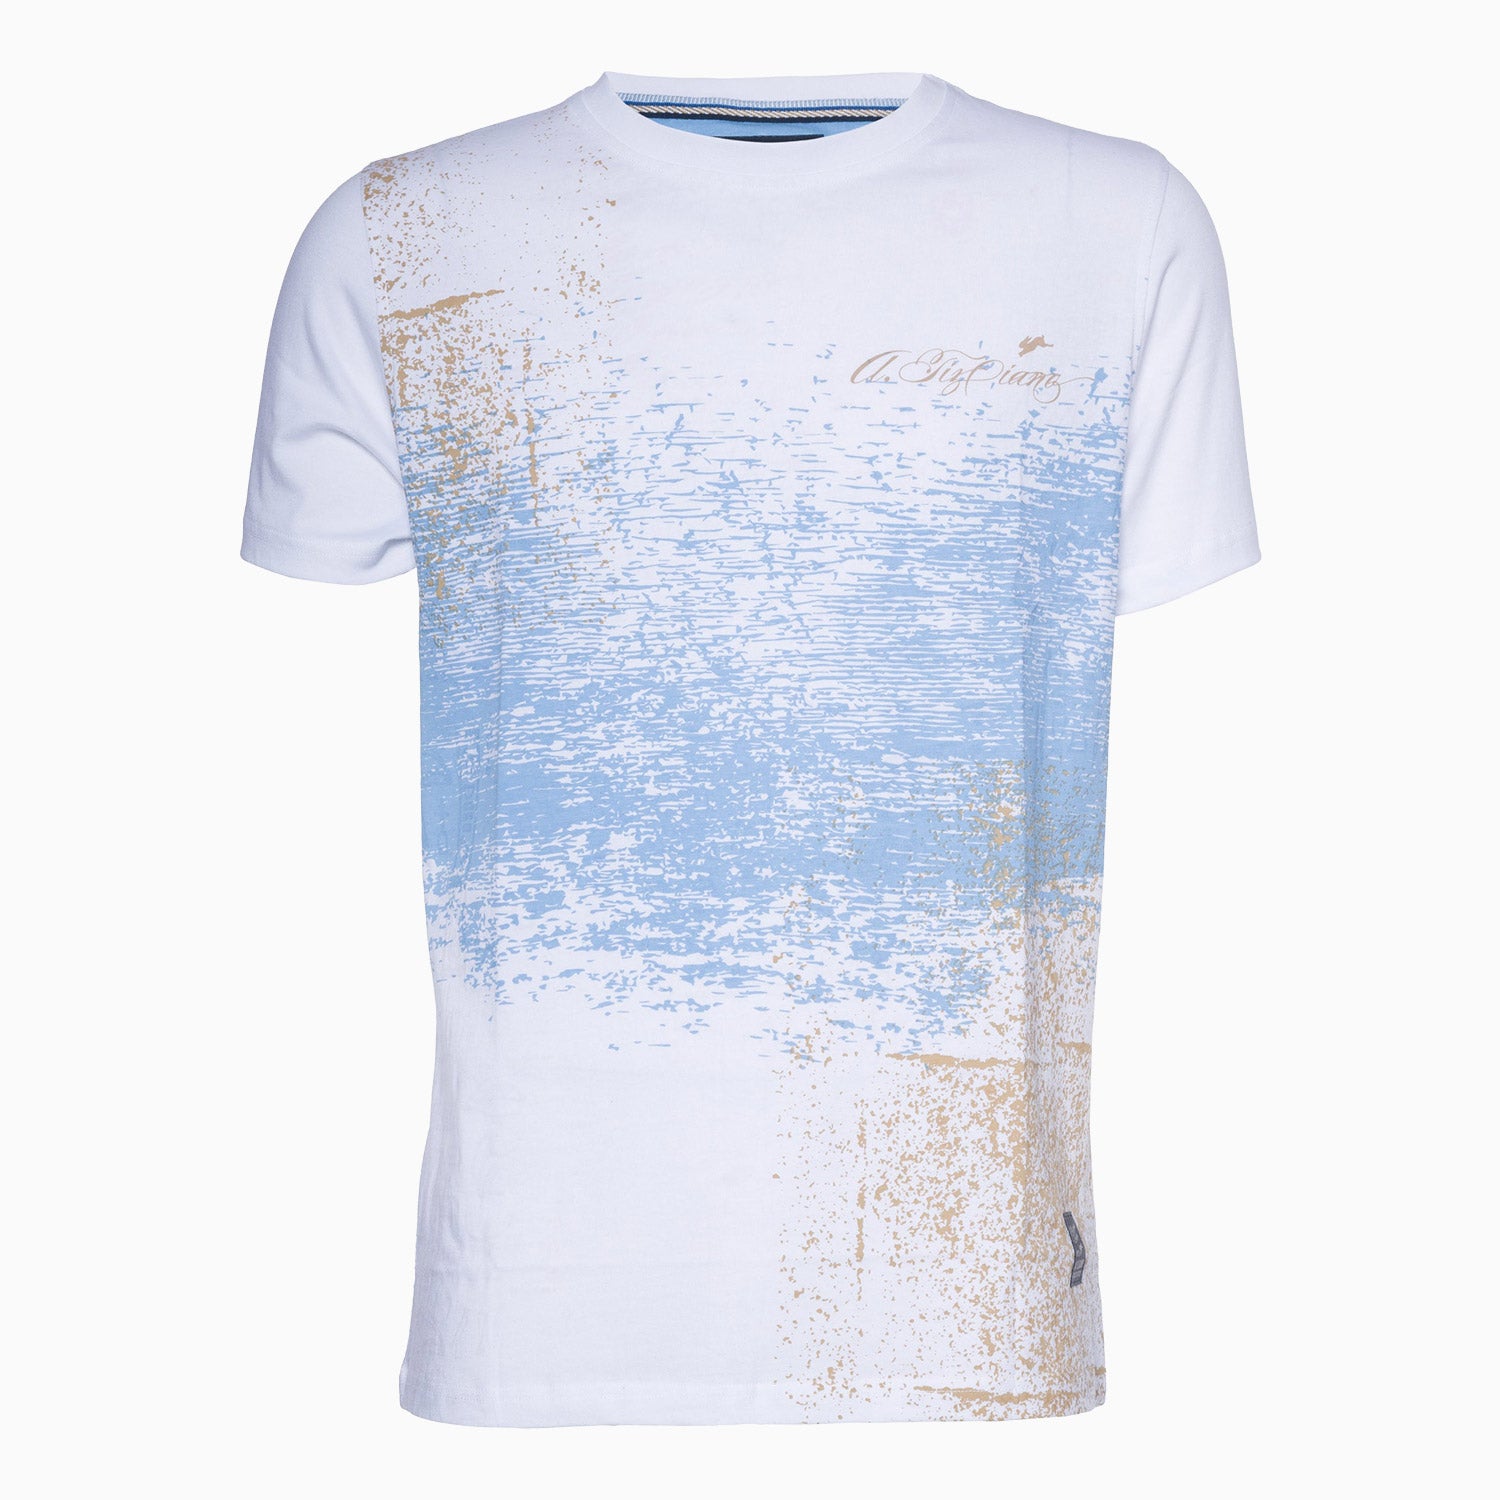 a-tiziano-mens-reubin-graphic-print-short-sleeve-t-shirt-41atm4323-wht